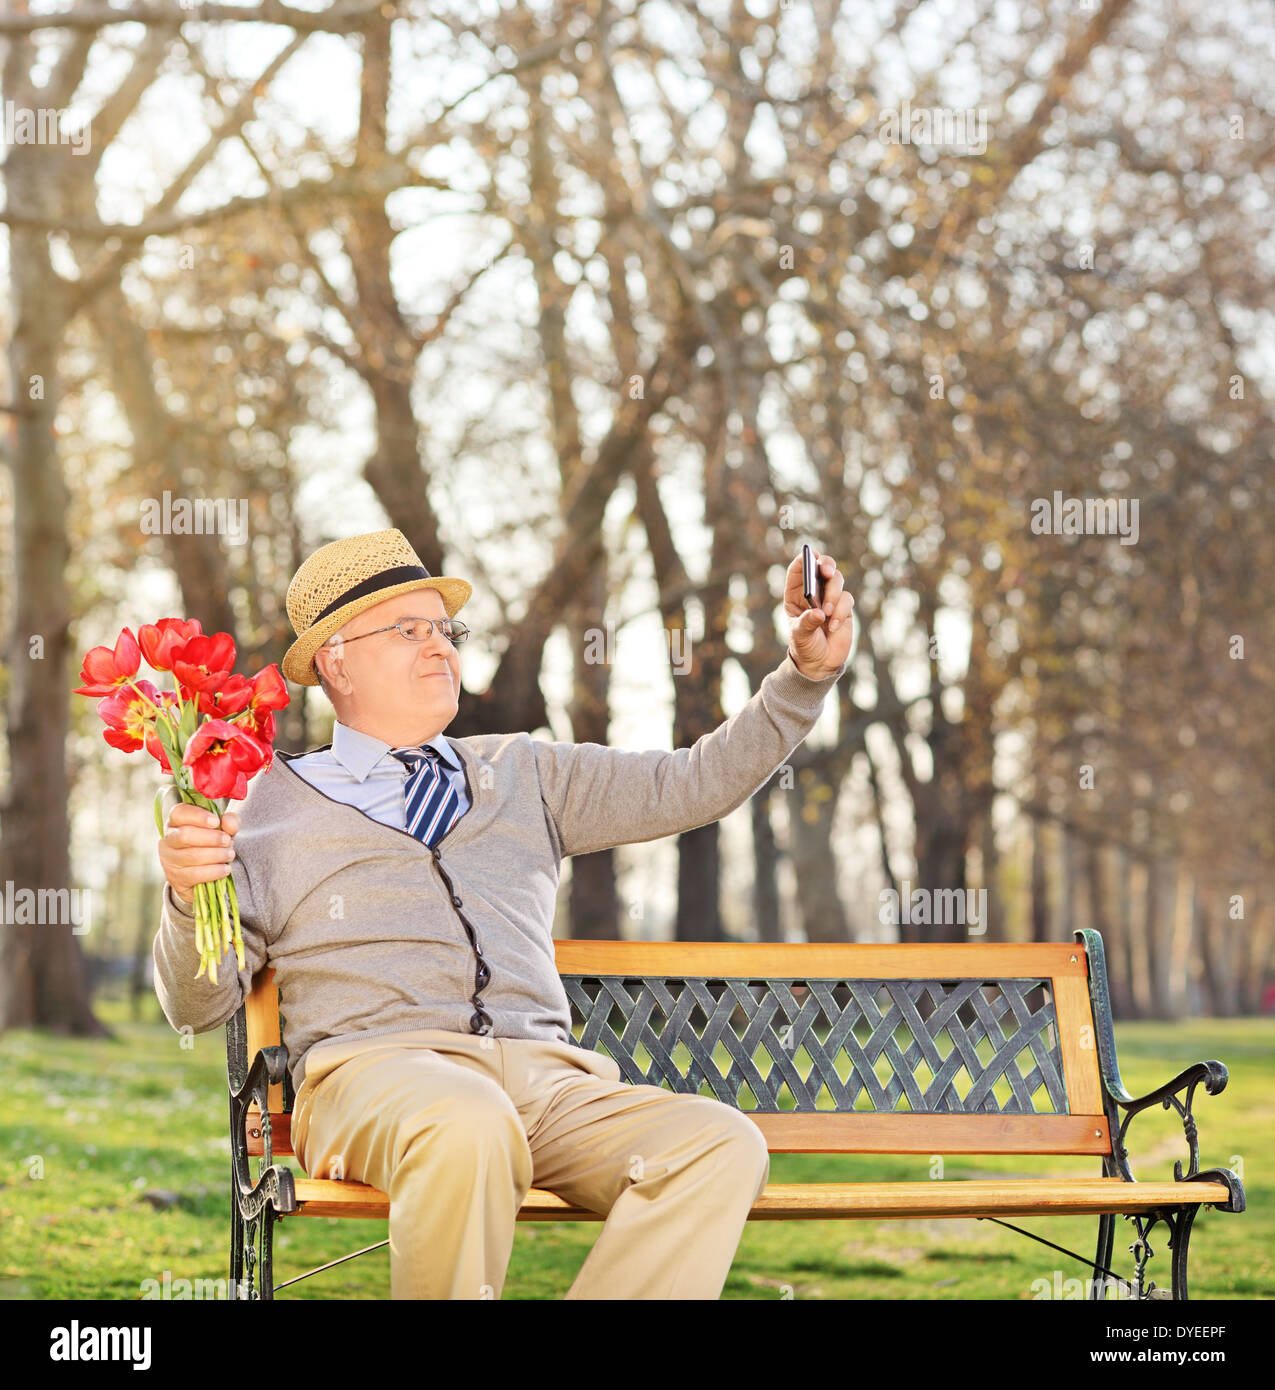 Senior holding flowers and taking selfie in park Stock Photo